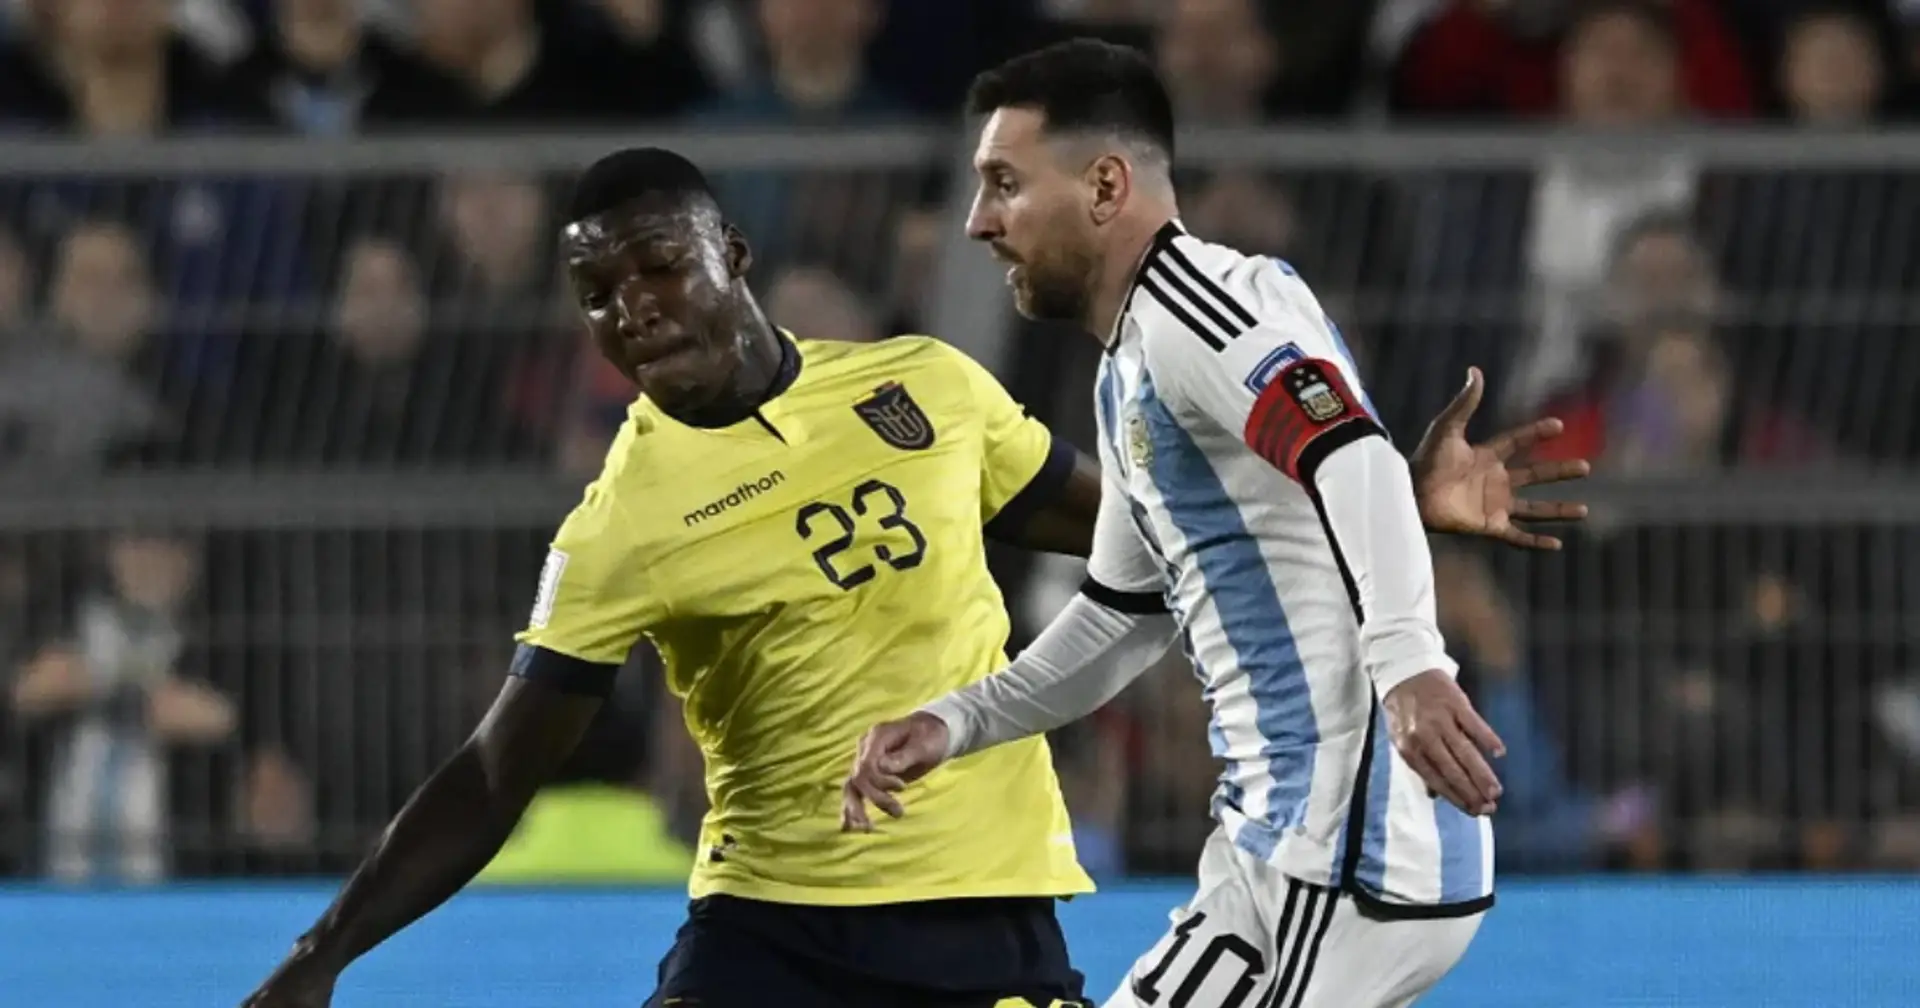 'He made him uncomfortable': Caicedo praised for doing good job vs Messi for Ecuador